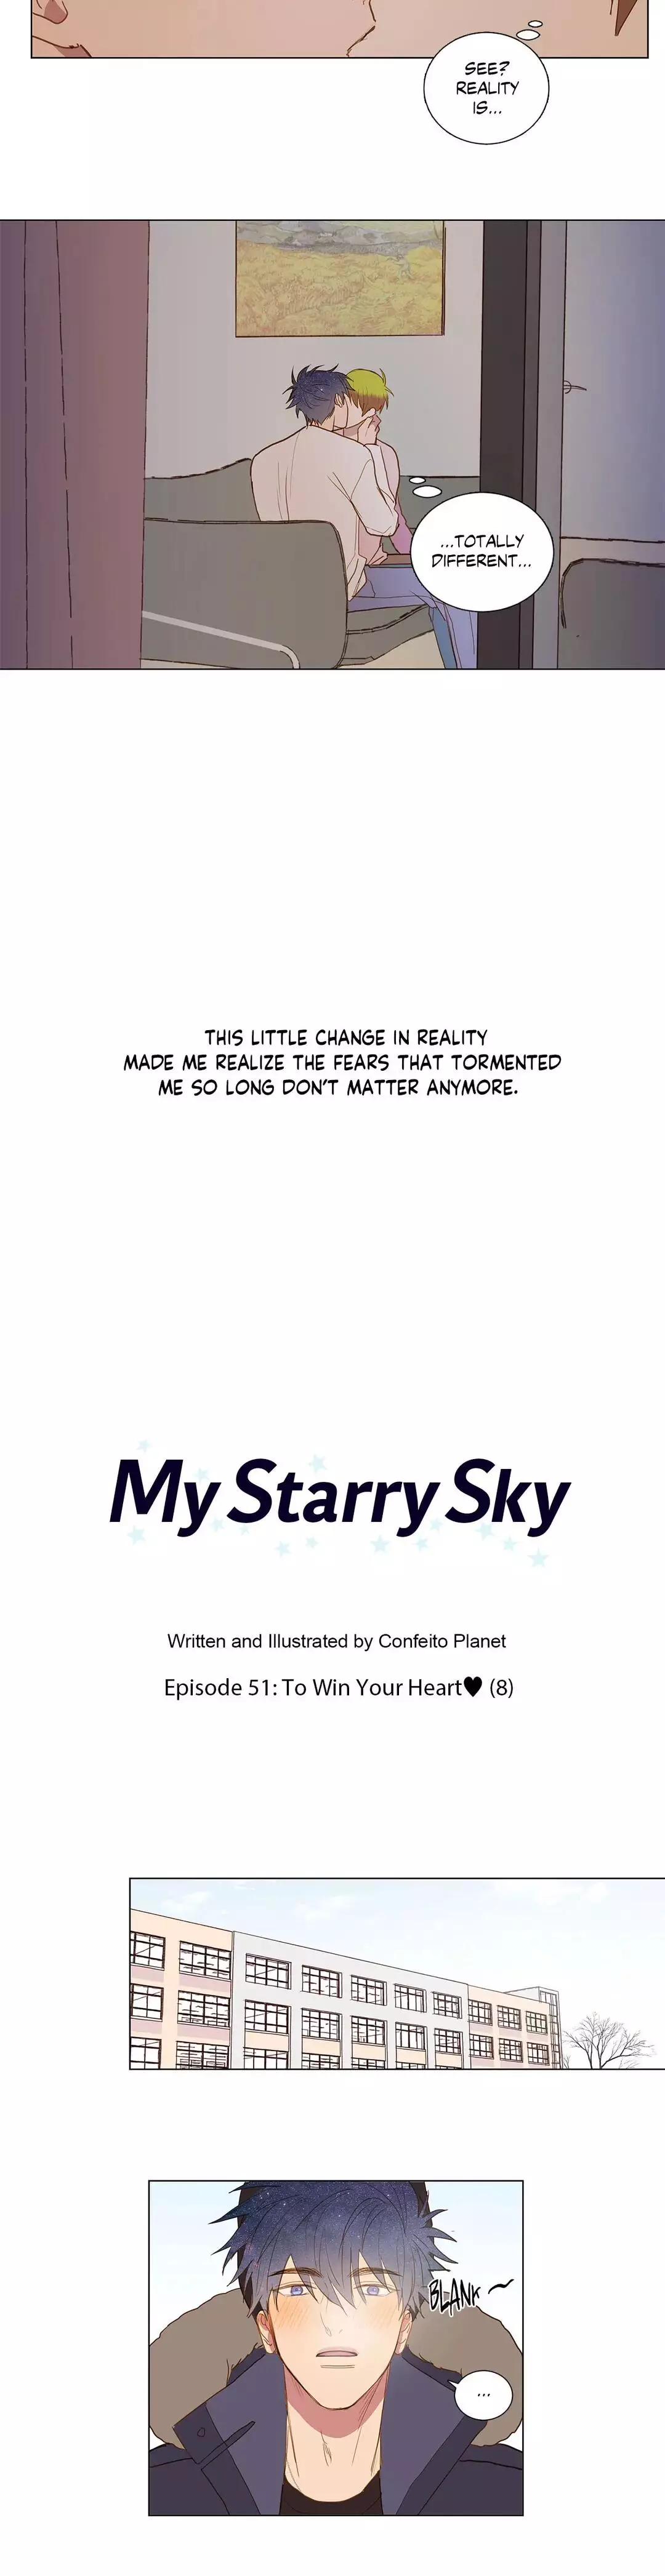 My Starry Sky - 51 page 9-9dabdb81